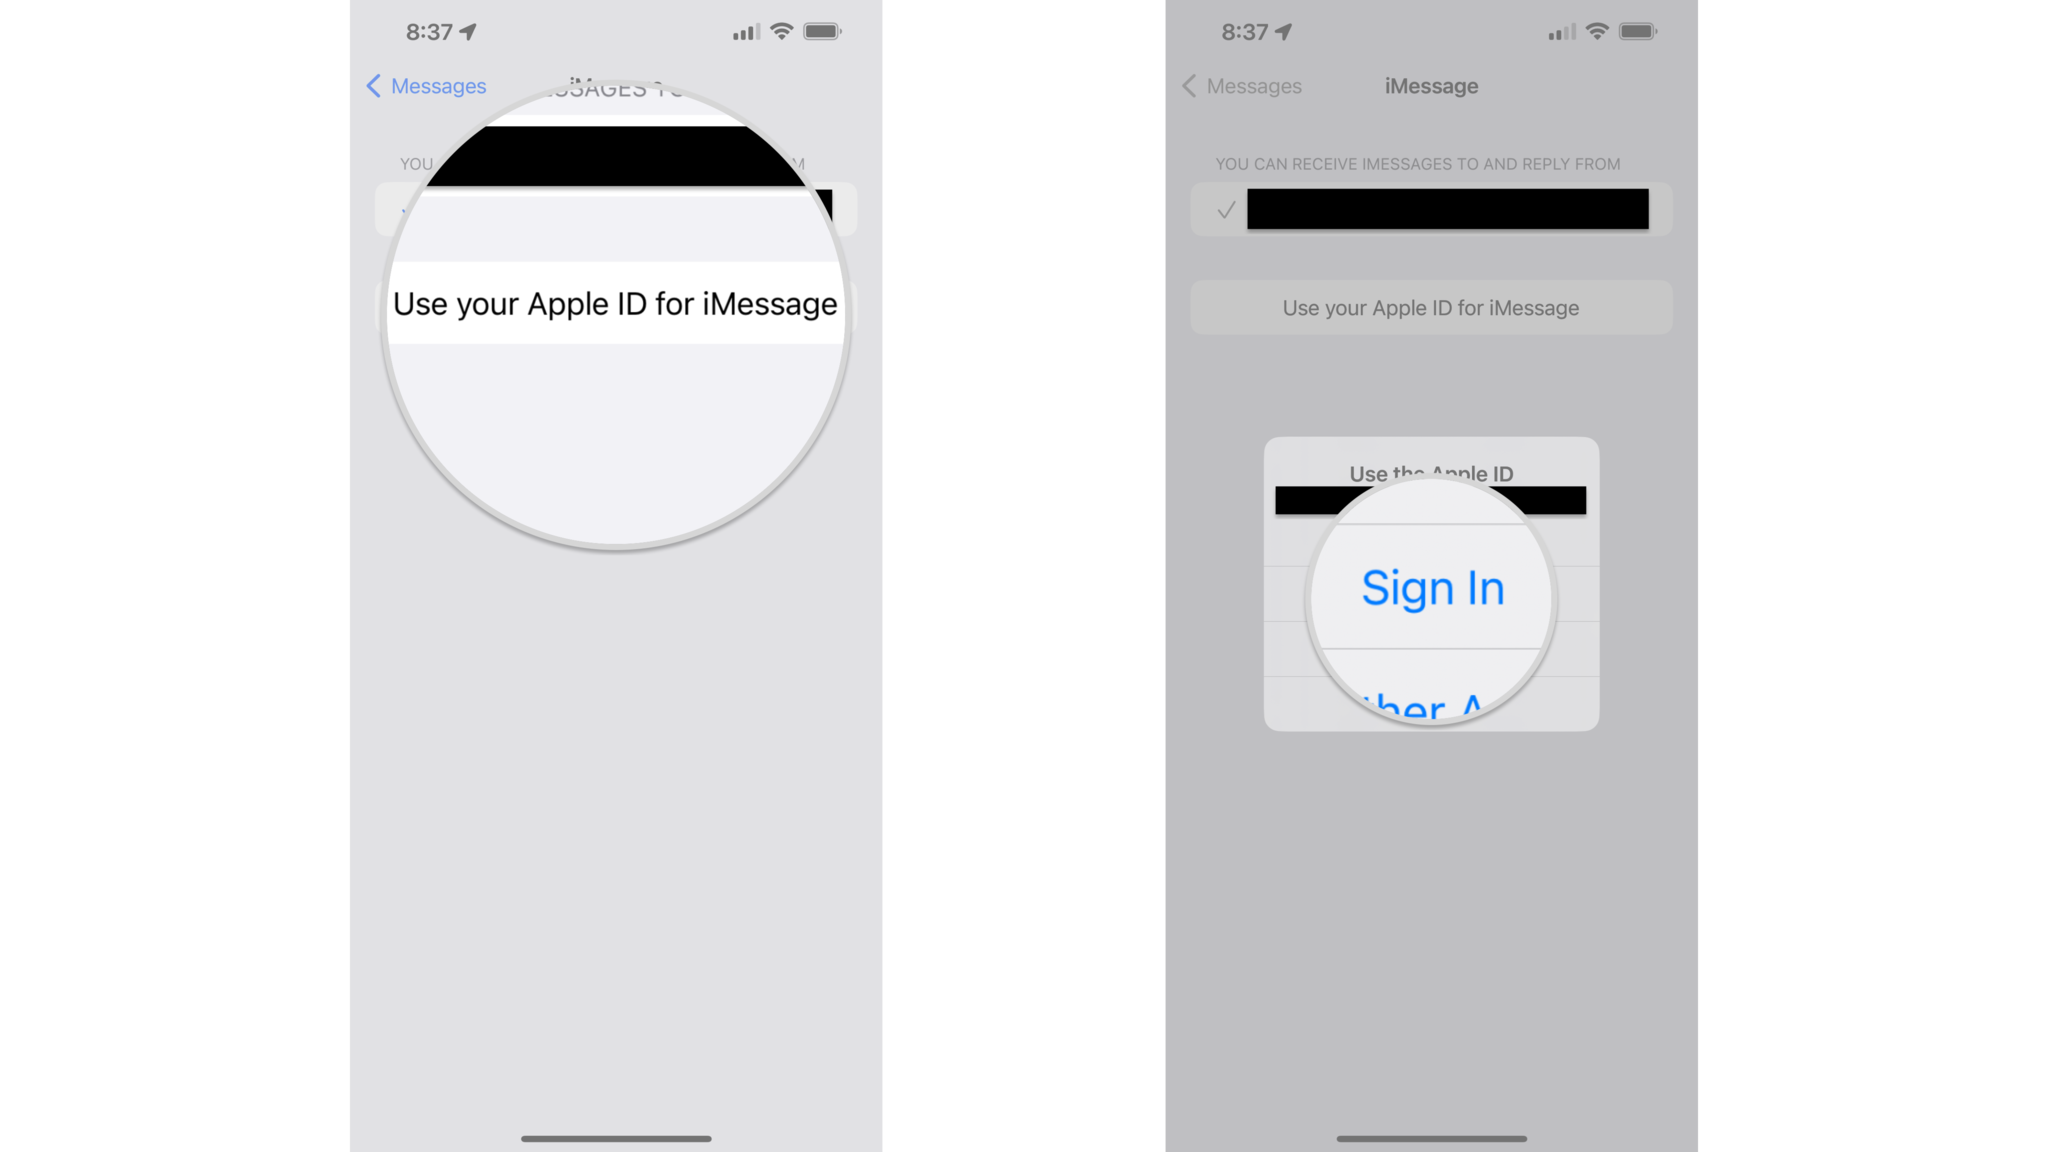 Cara masuk ke ID Apple Anda di Pesan di iPhone menunjukkan langkah-langkah berikut: ketuk Gunakan ID Apple Anda untuk iMessage, ketuk Masuk